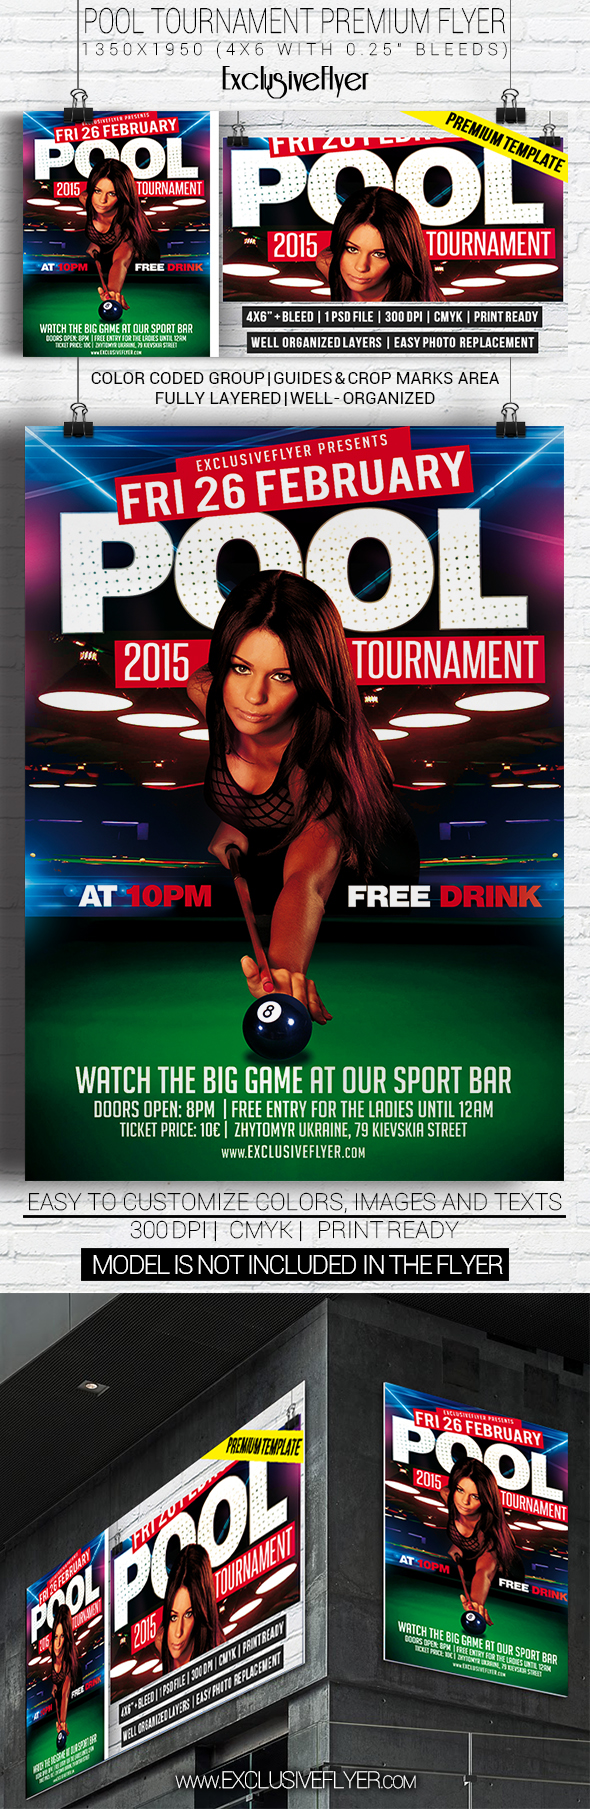 Pool Tournament Premium Flyer Template on Behance